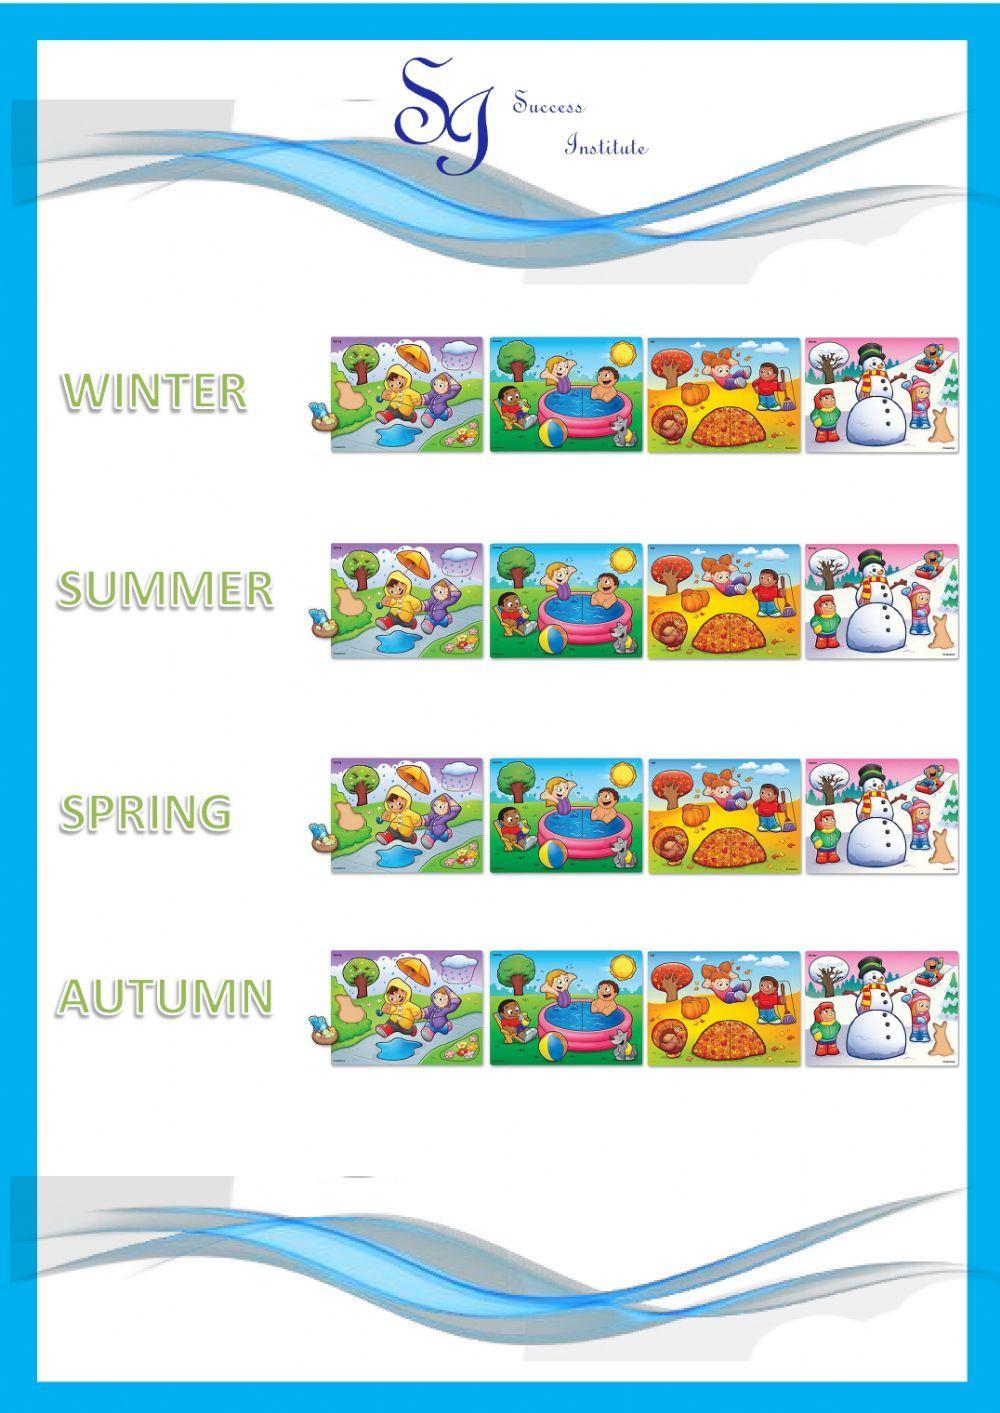 Seasons for kids